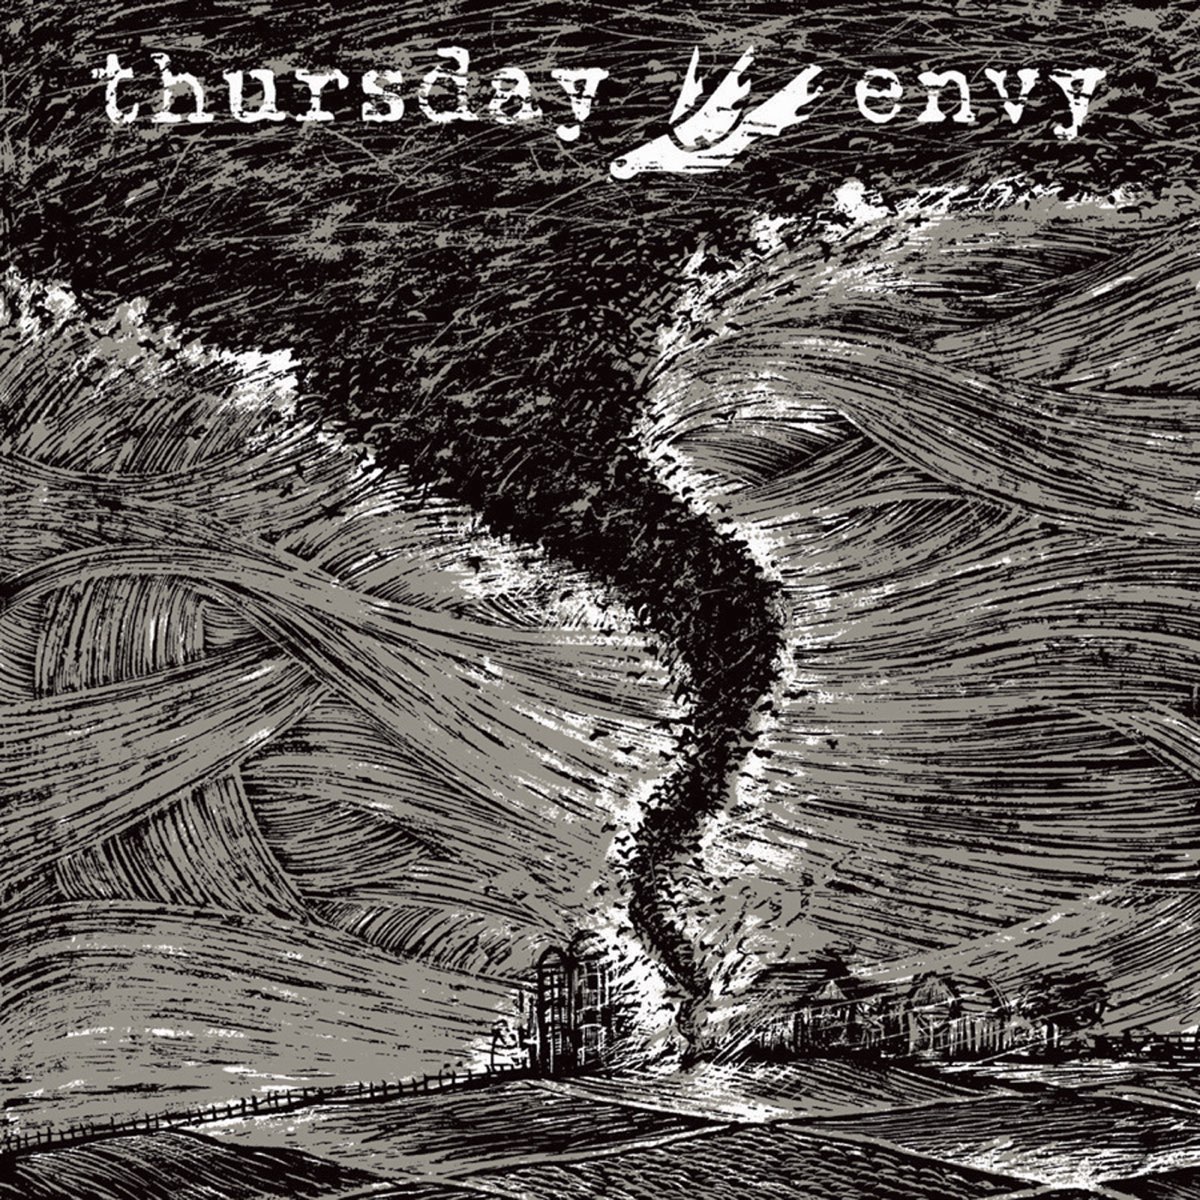 Thursday / Envy / Thursday + envy